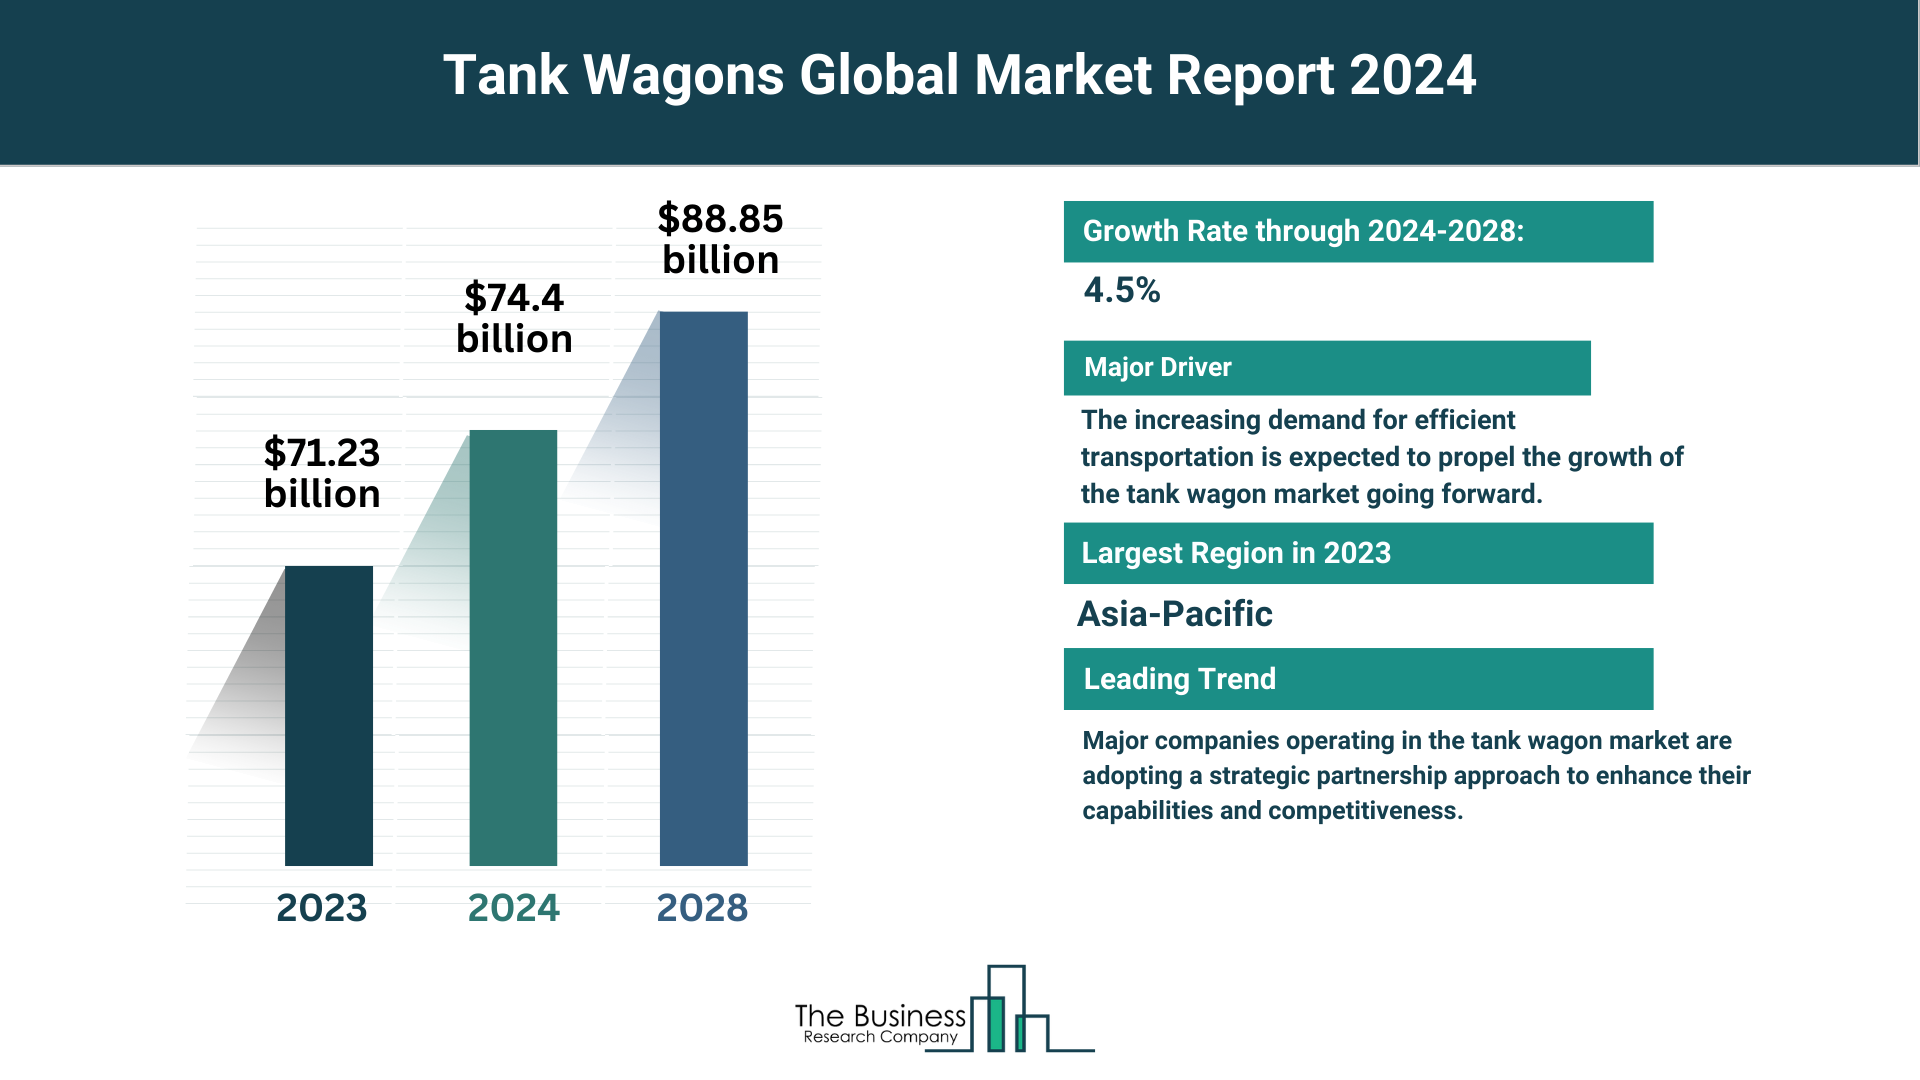 Global Tank Wagons Market